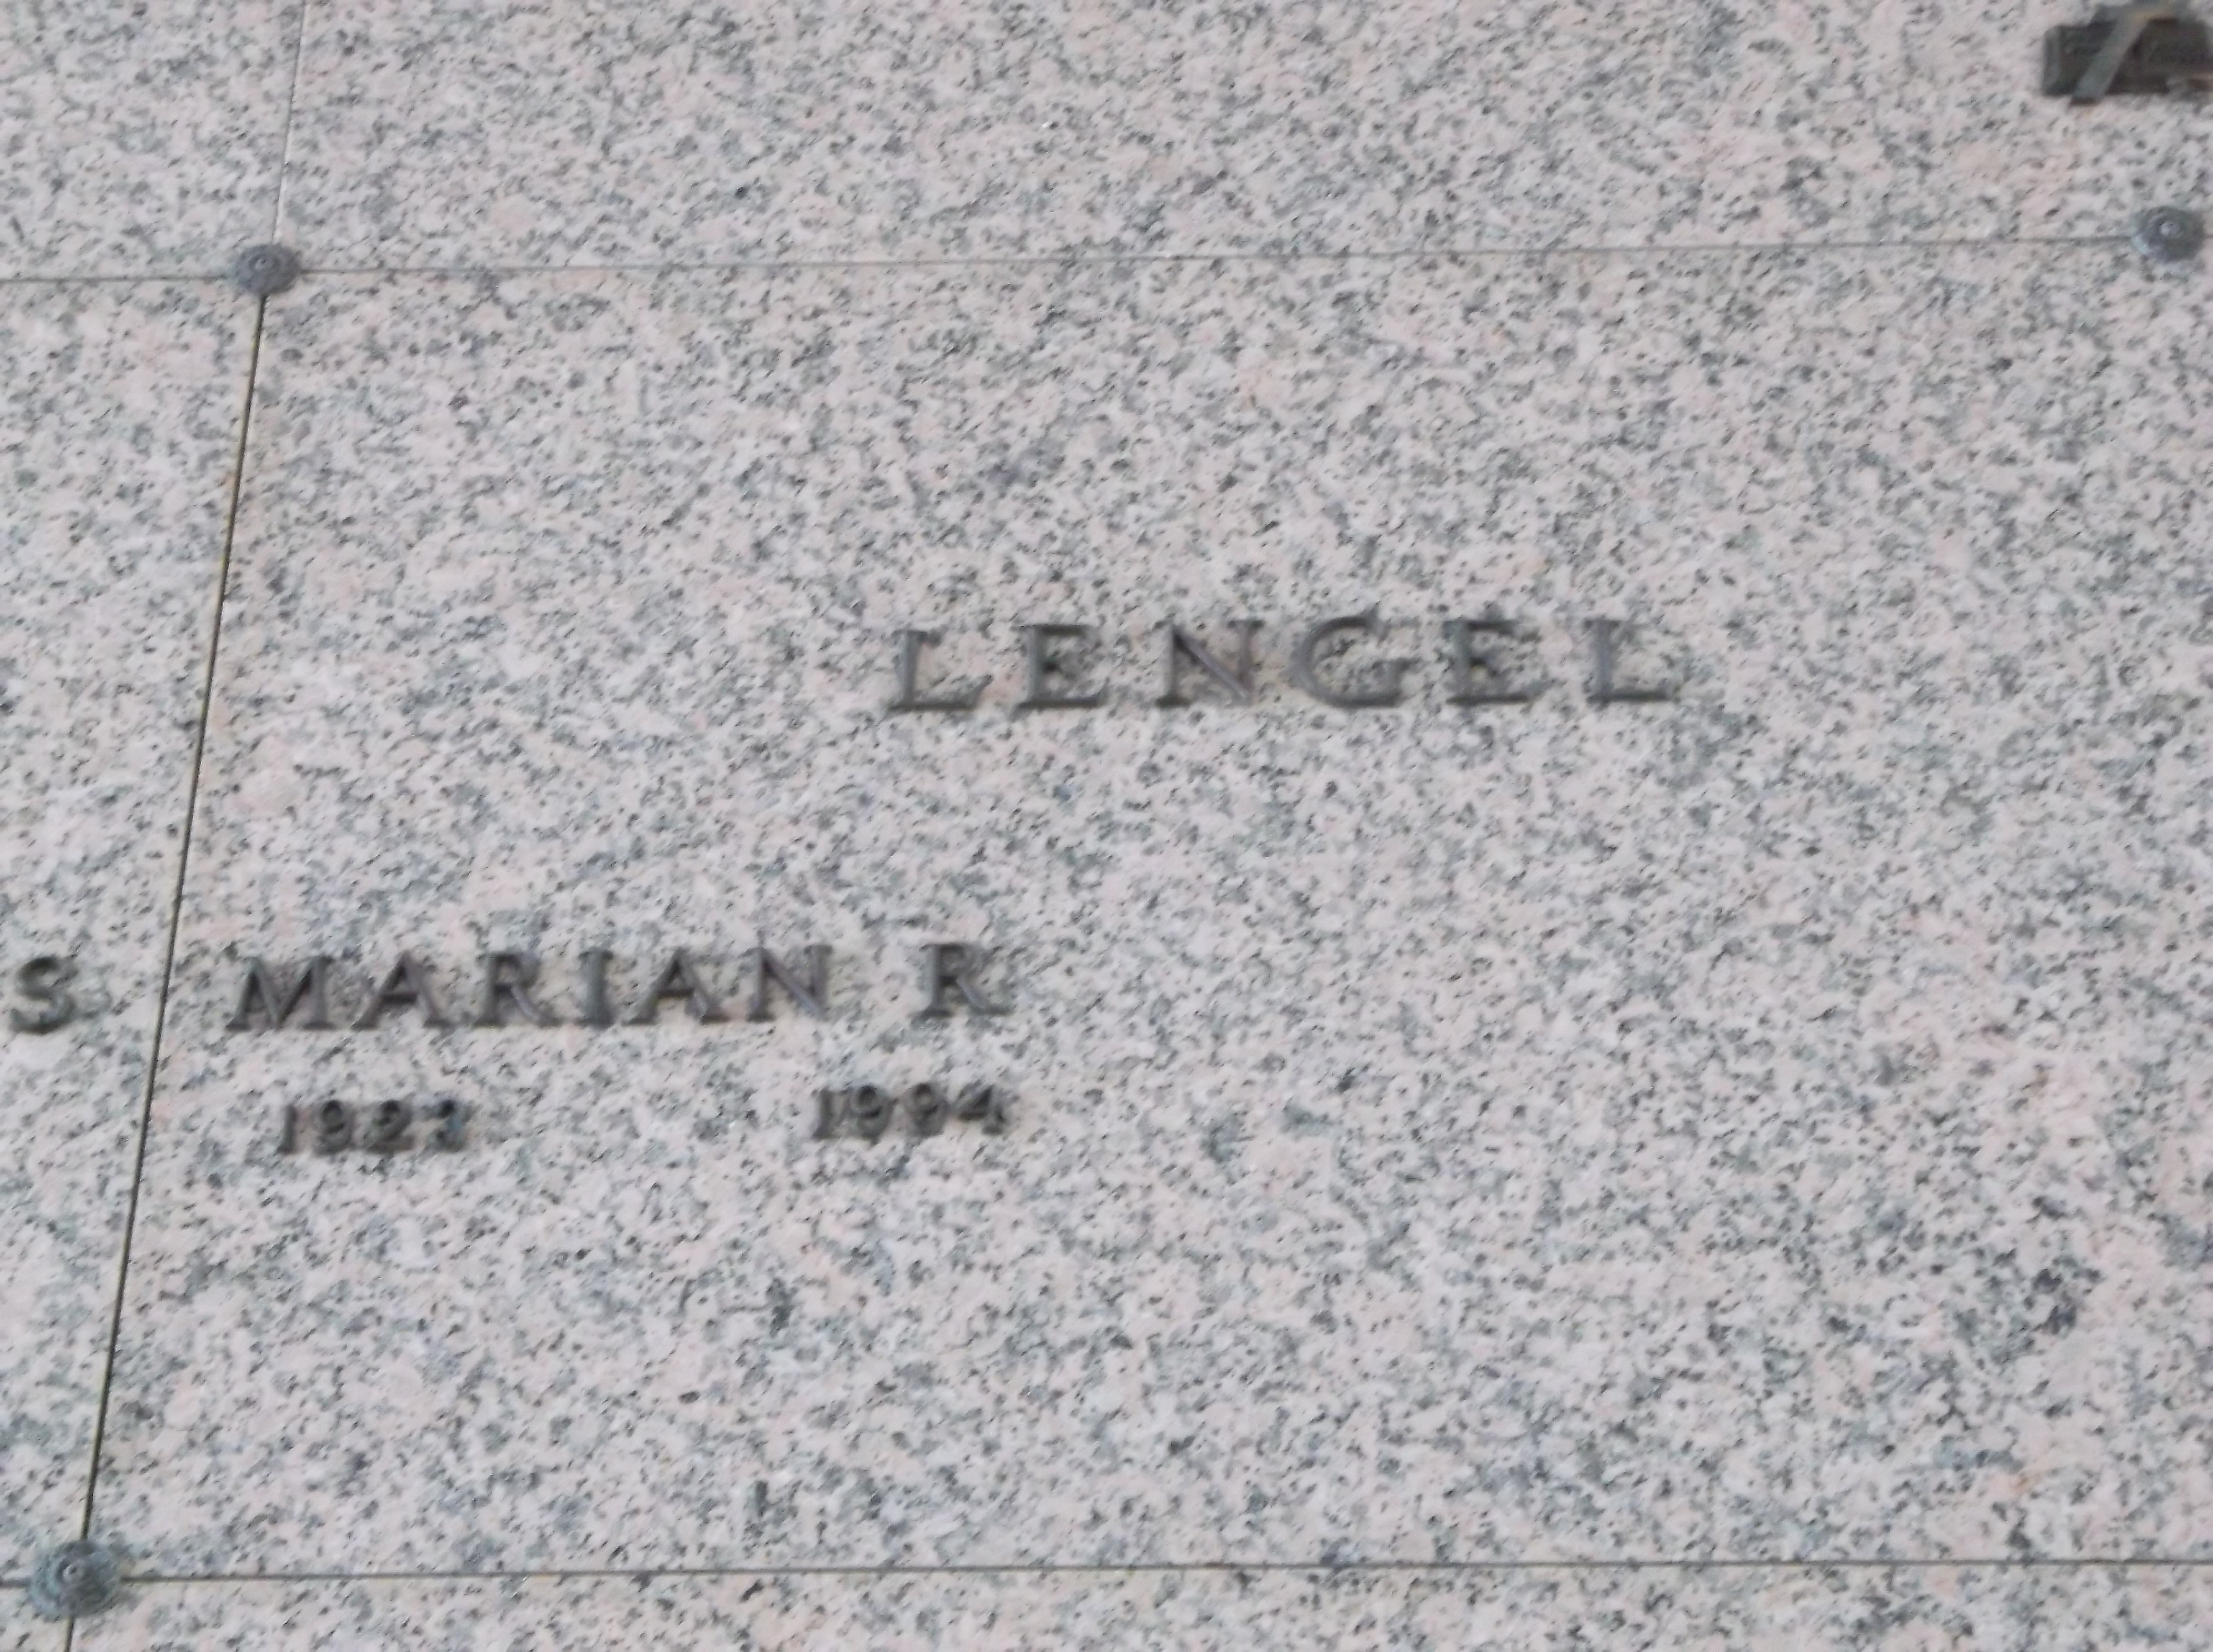 Marian R Lengel